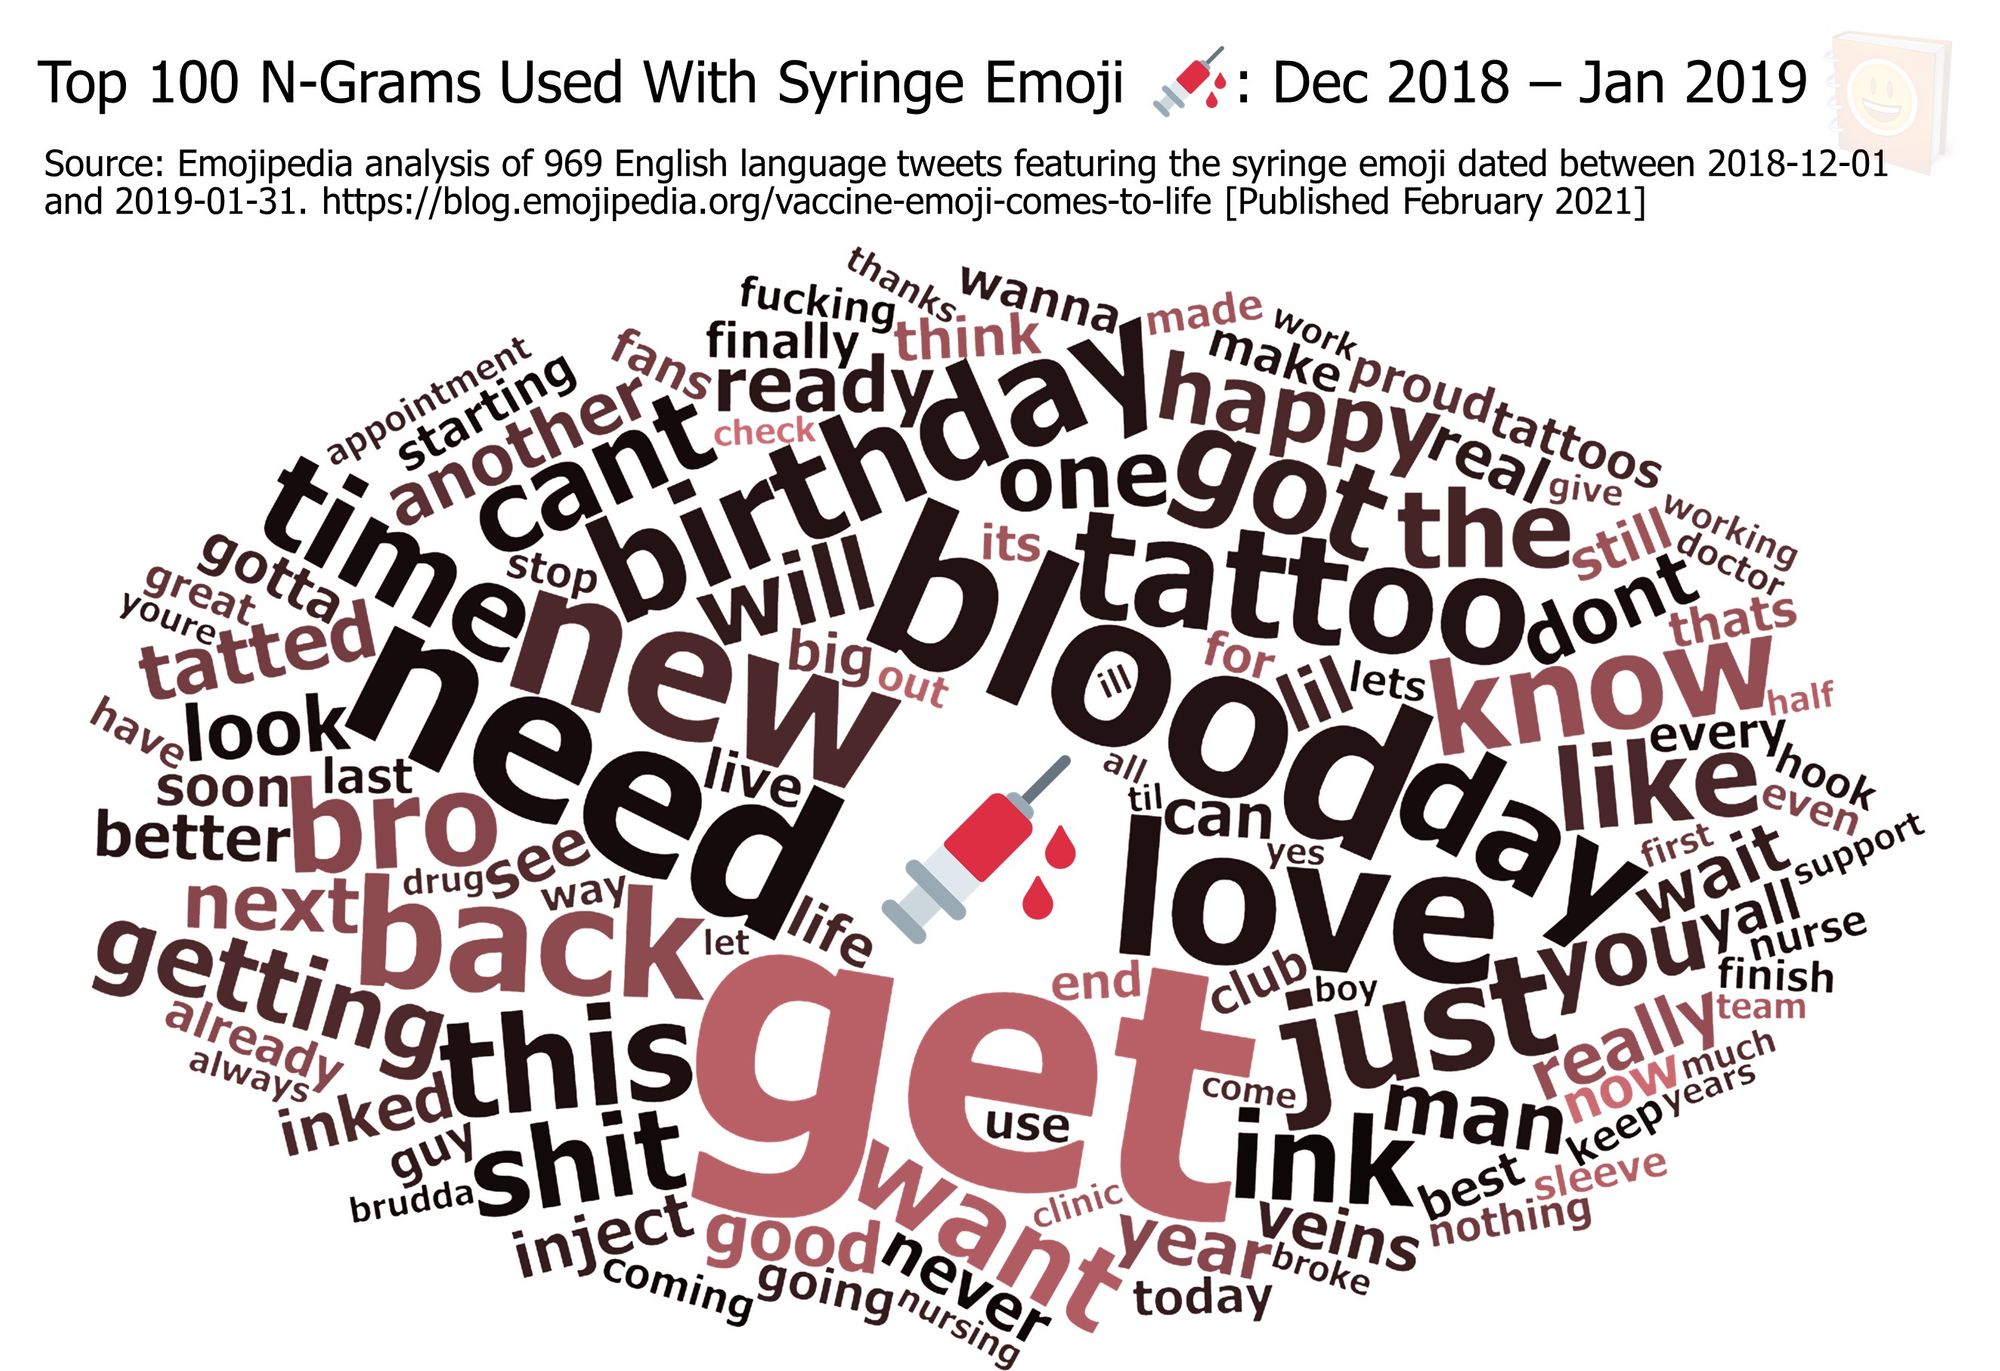 Emojipedia-Syringe-Emoji-Analysis---February-2021---Top-100-N-Grams-Used-With-Syringe-Emoji-Dec-2018---Jan-2019-2